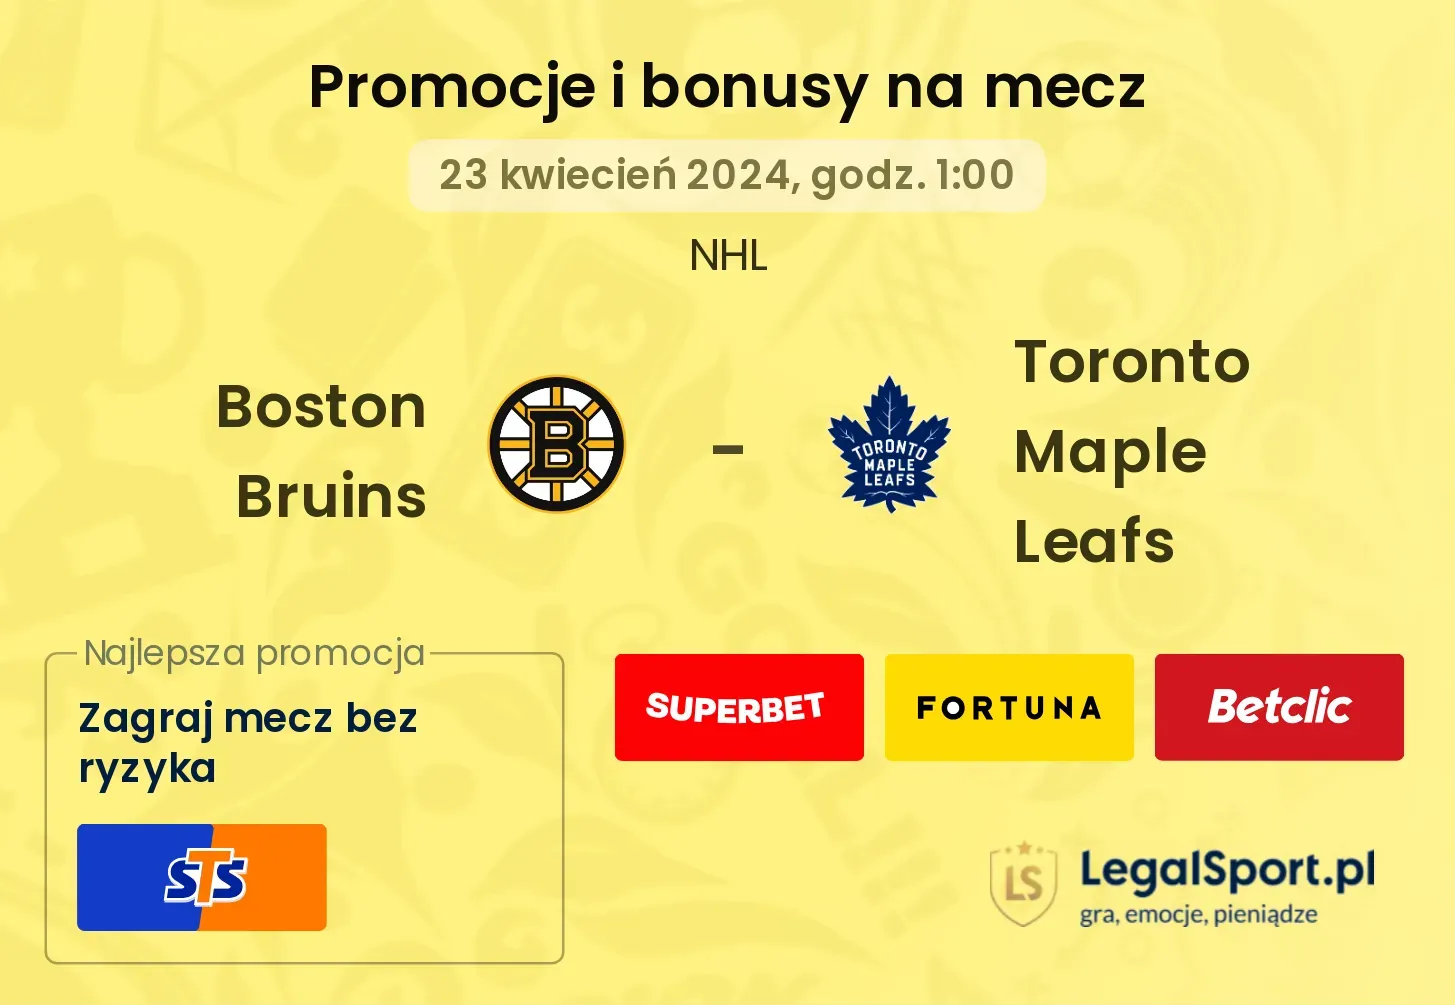 Boston Bruins - Toronto Maple Leafs promocje bonusy na mecz